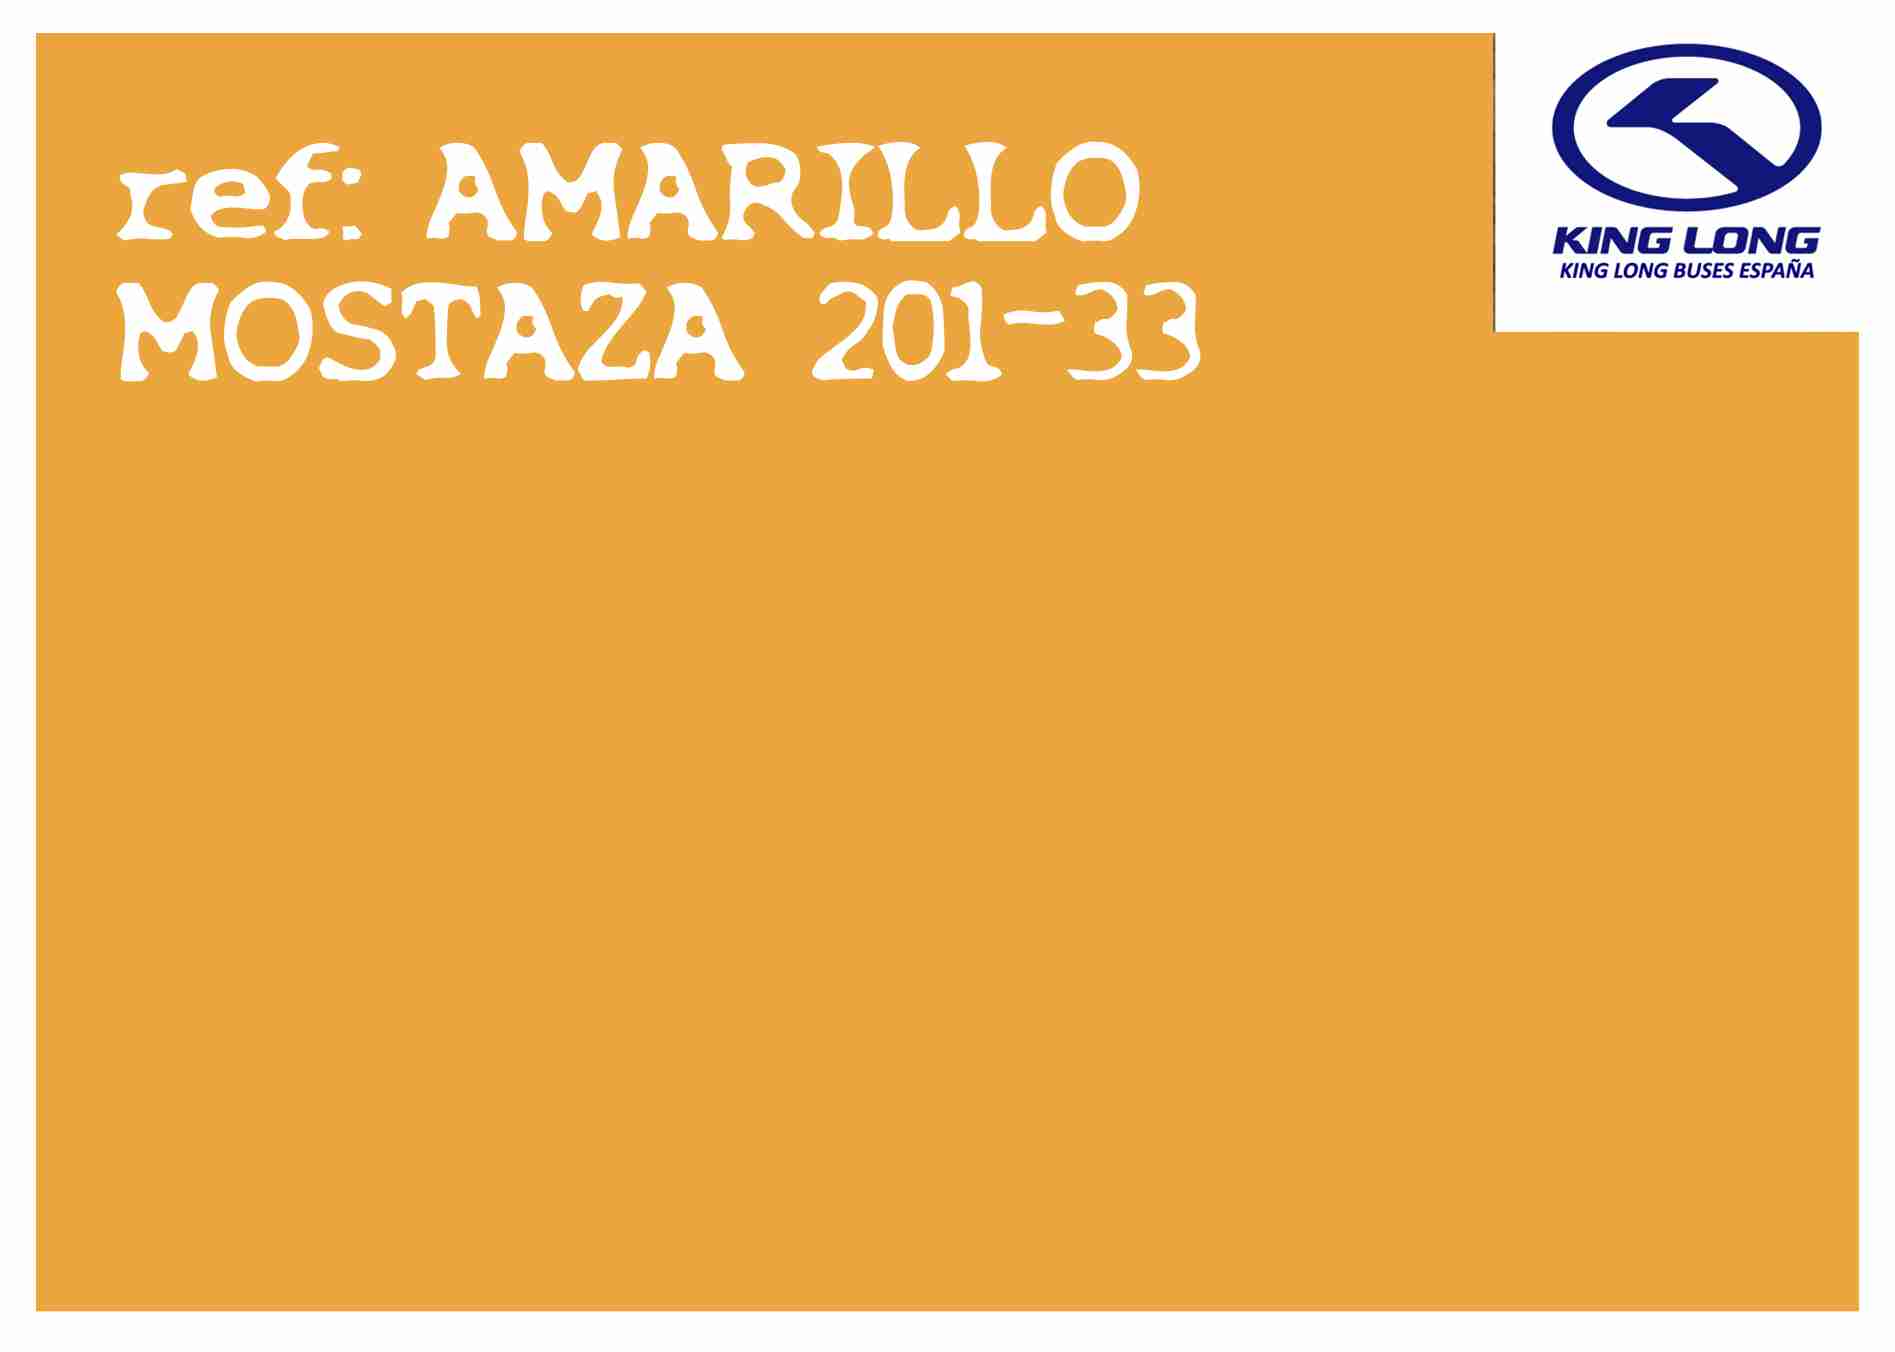 AMARILLOMOSTAZA201-33